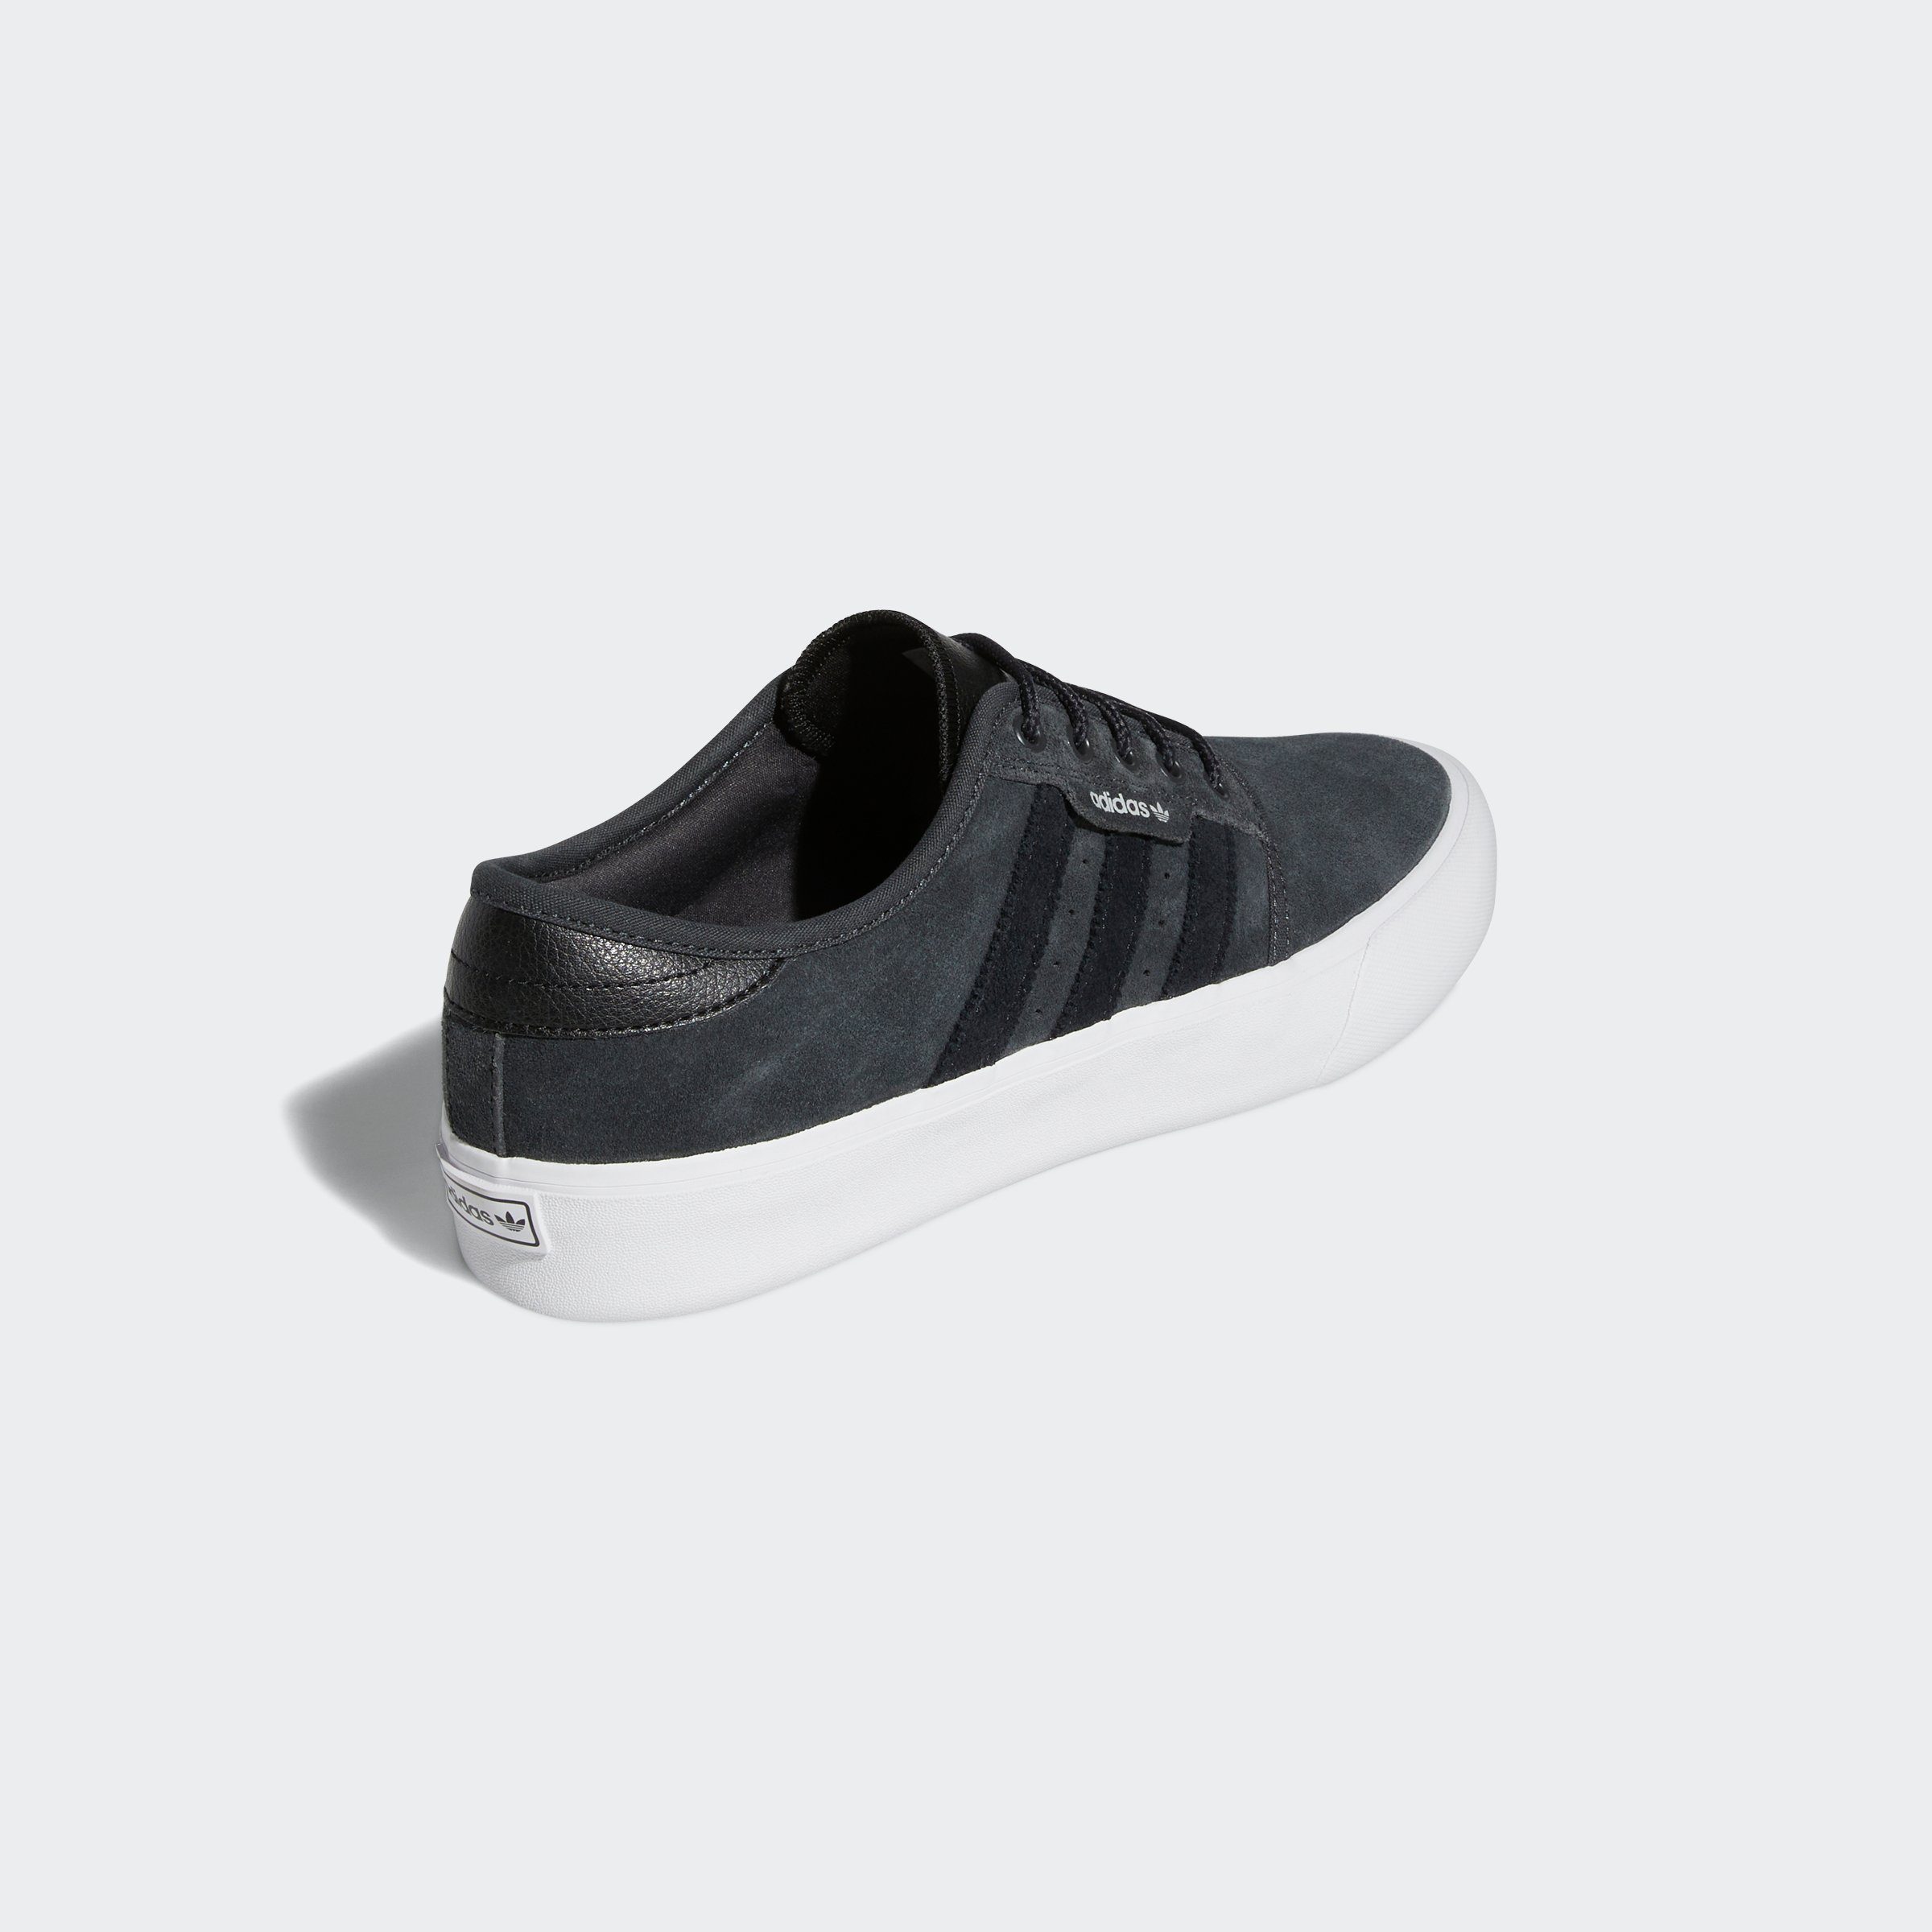 Sneaker XT SEELEY Originals adidas